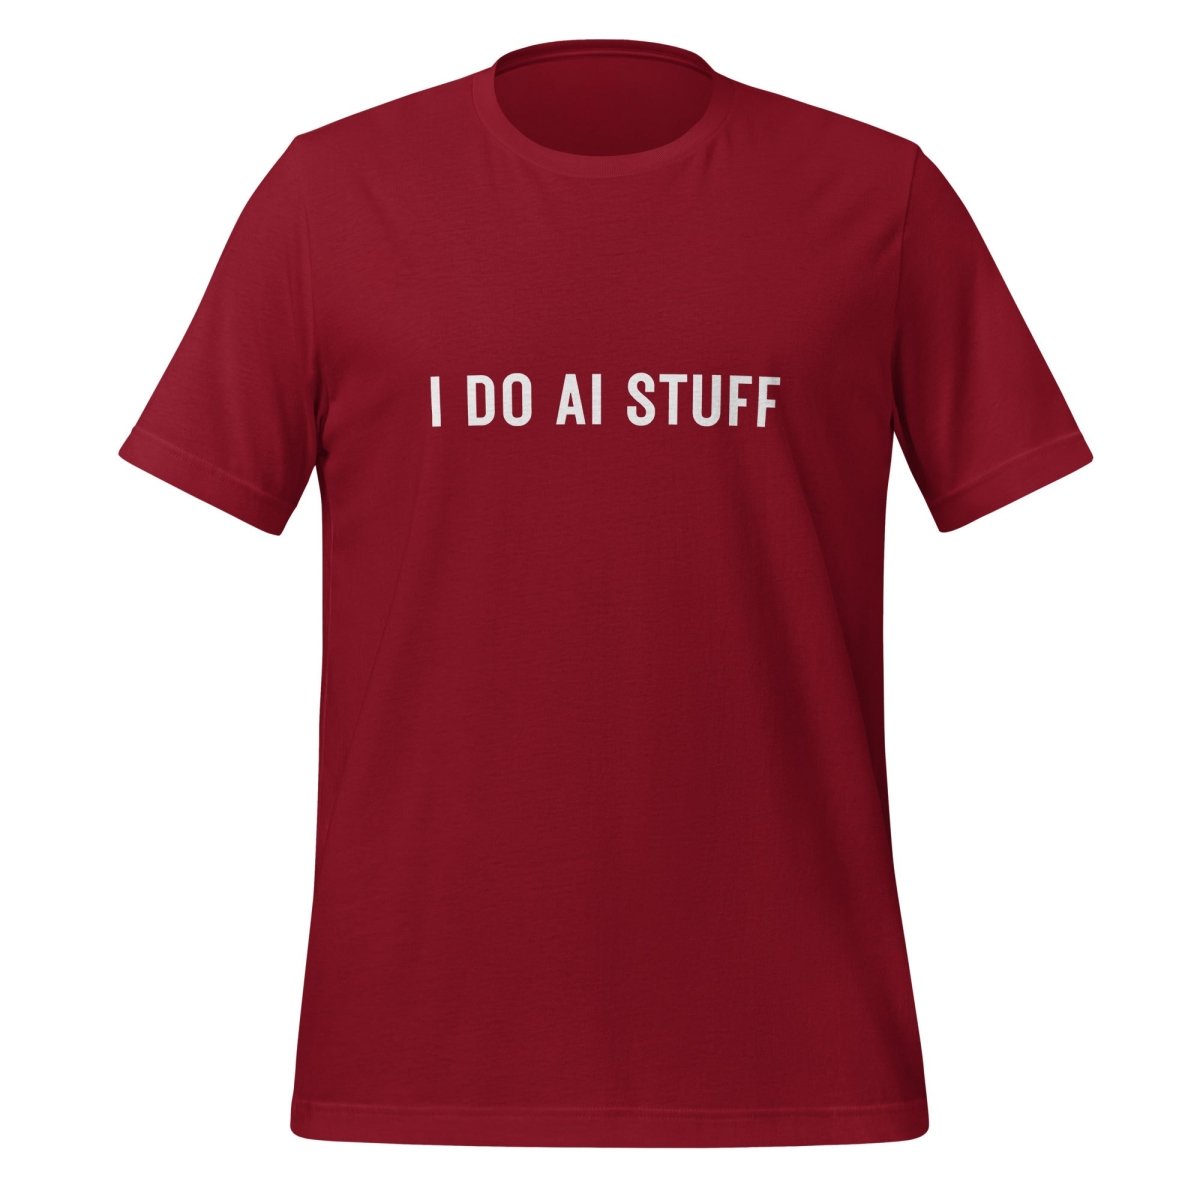 I Do AI Stuff T - Shirt 2 (unisex) - Cardinal - AI Store